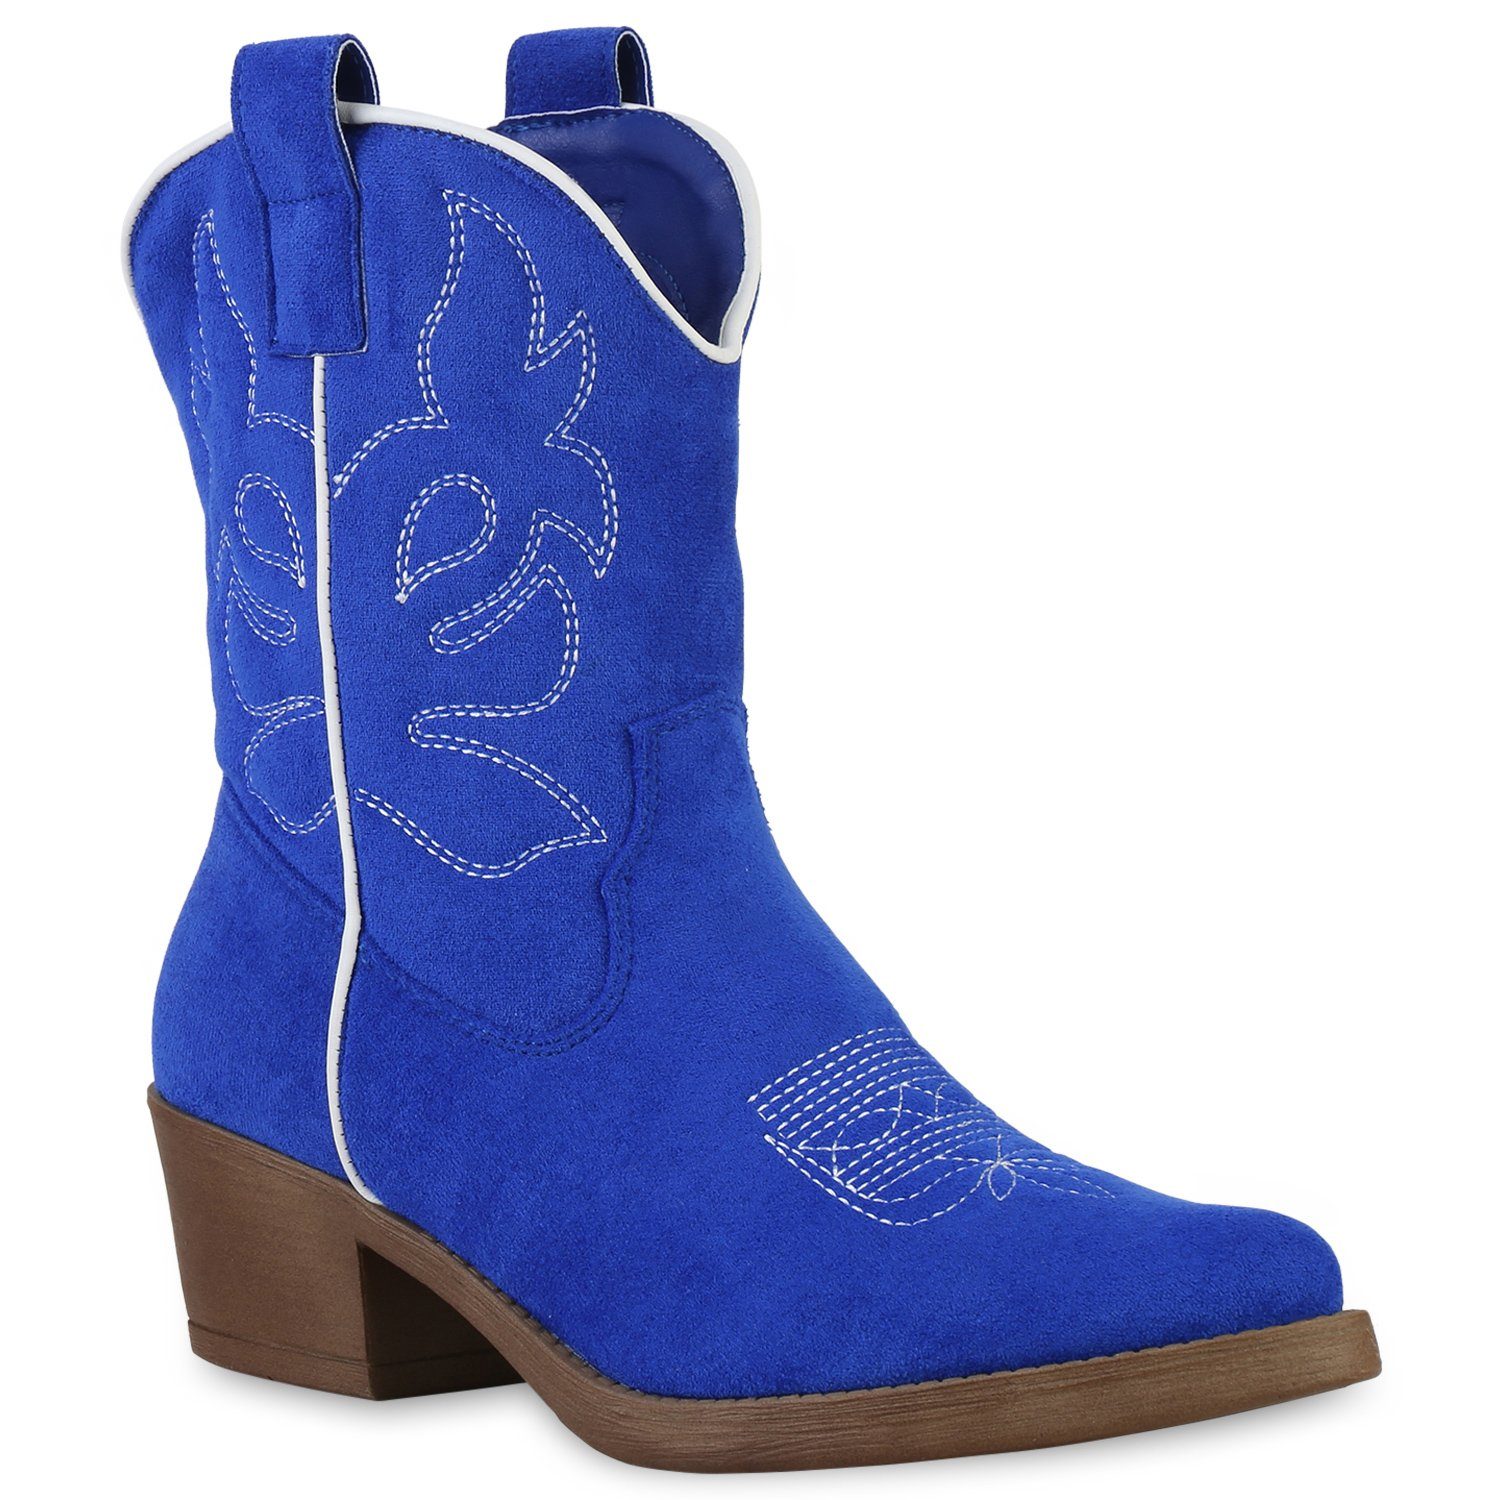 Boots HILL VAN Velours 840203 Cowboy Blau Schuhe